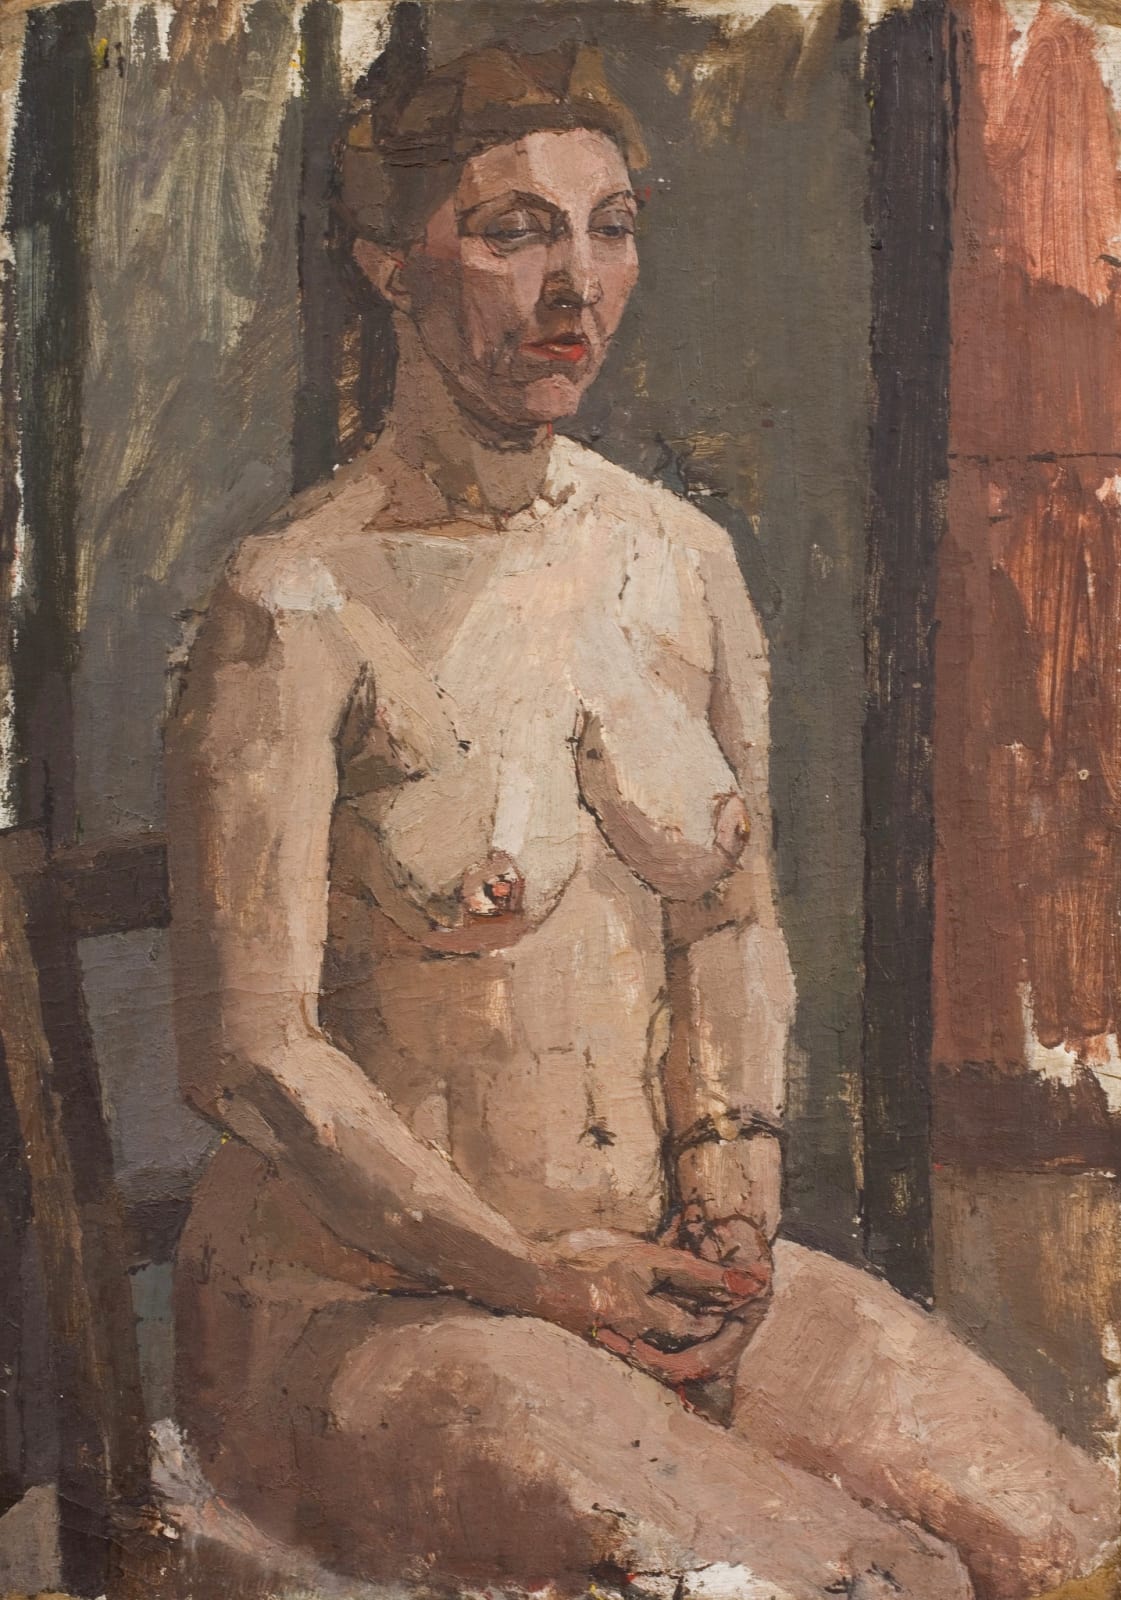 Euan Uglow, Seated Nude, 1954 c.